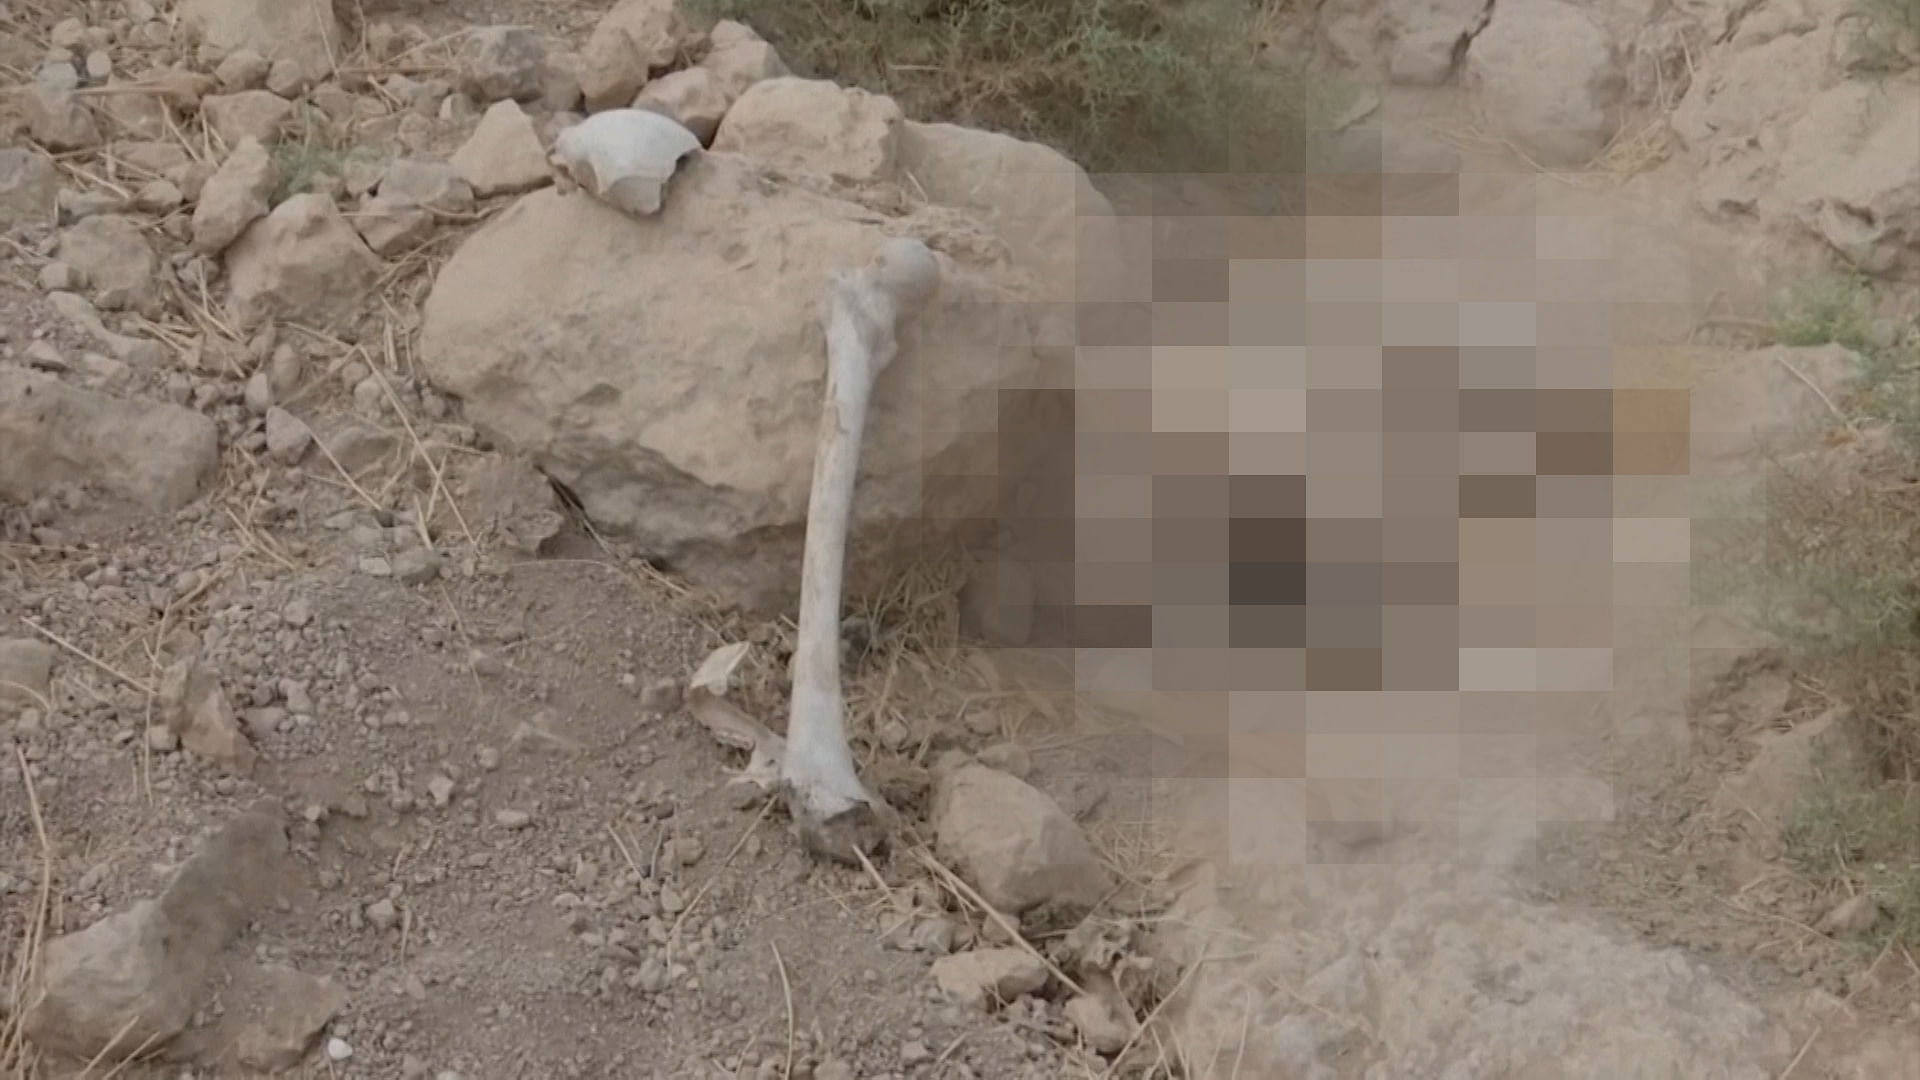 The bodies were found buried near the village of Badush, northwest of Mosul.